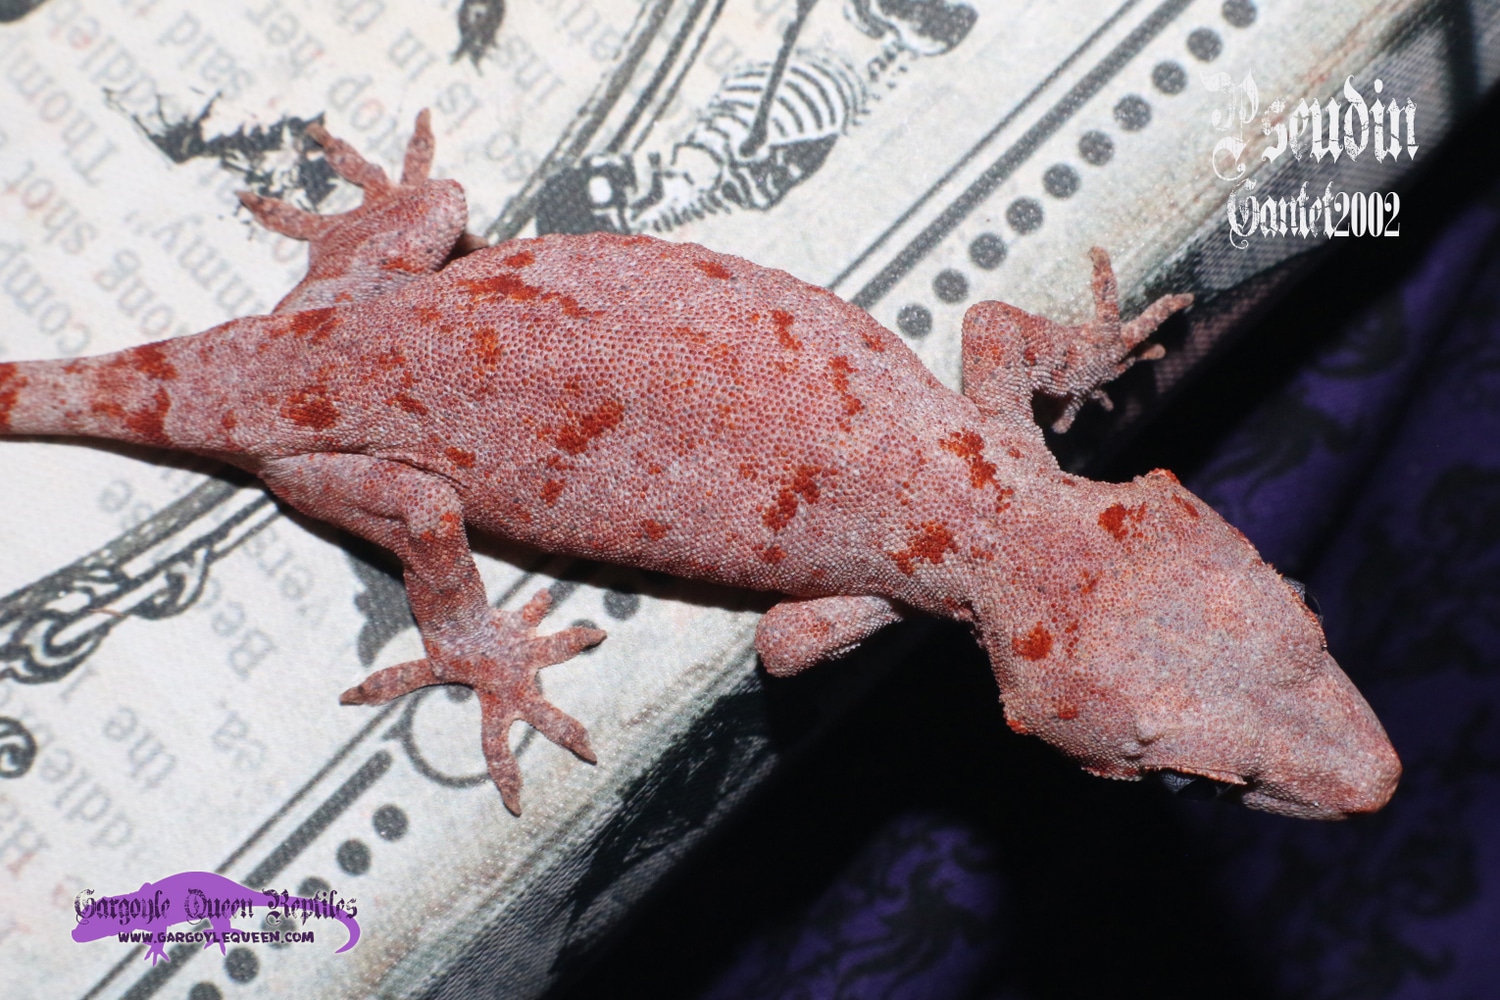 "Pseudin" Red Blotch W/ Pink Base Gargoyle Gecko by Gargoyle Queen Reptiles